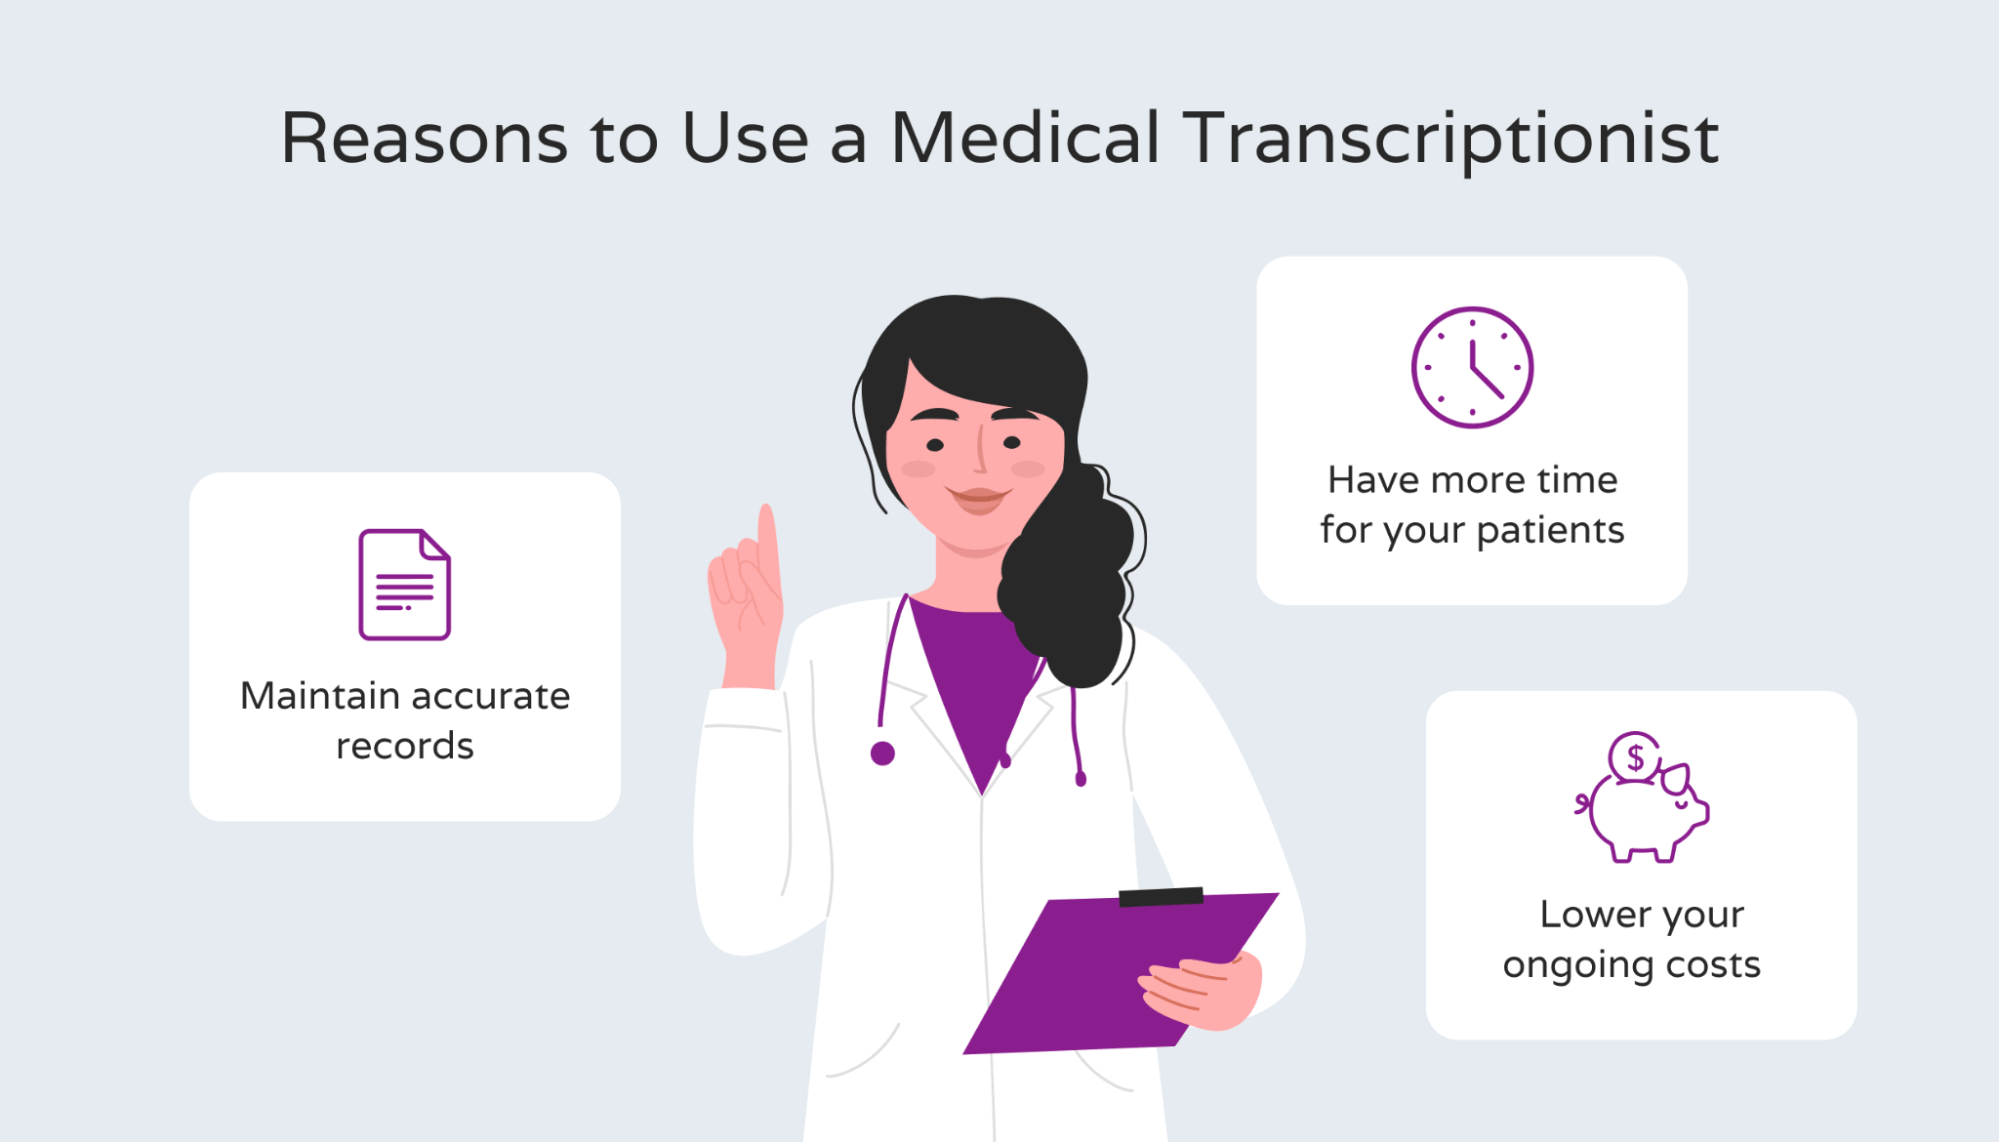 Medical transcriptionist benefits